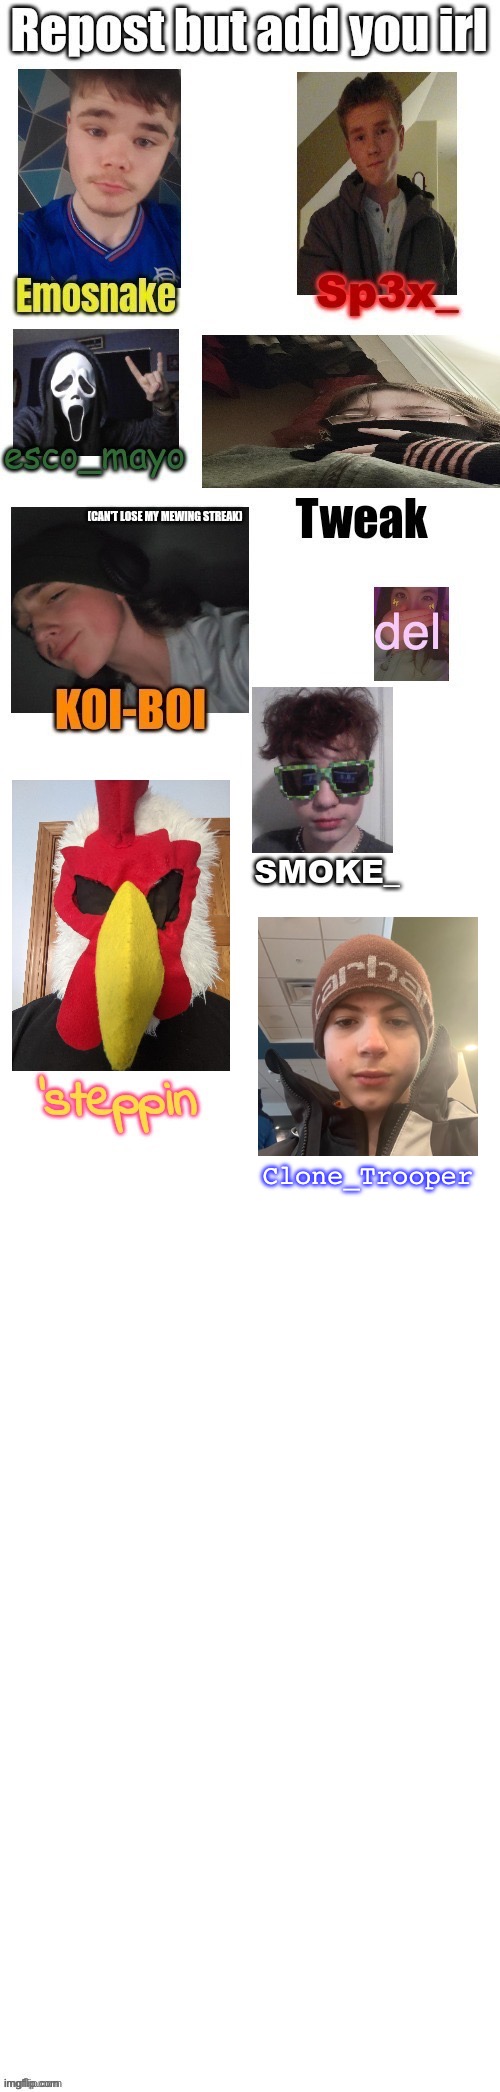 Clone_Trooper | made w/ Imgflip meme maker